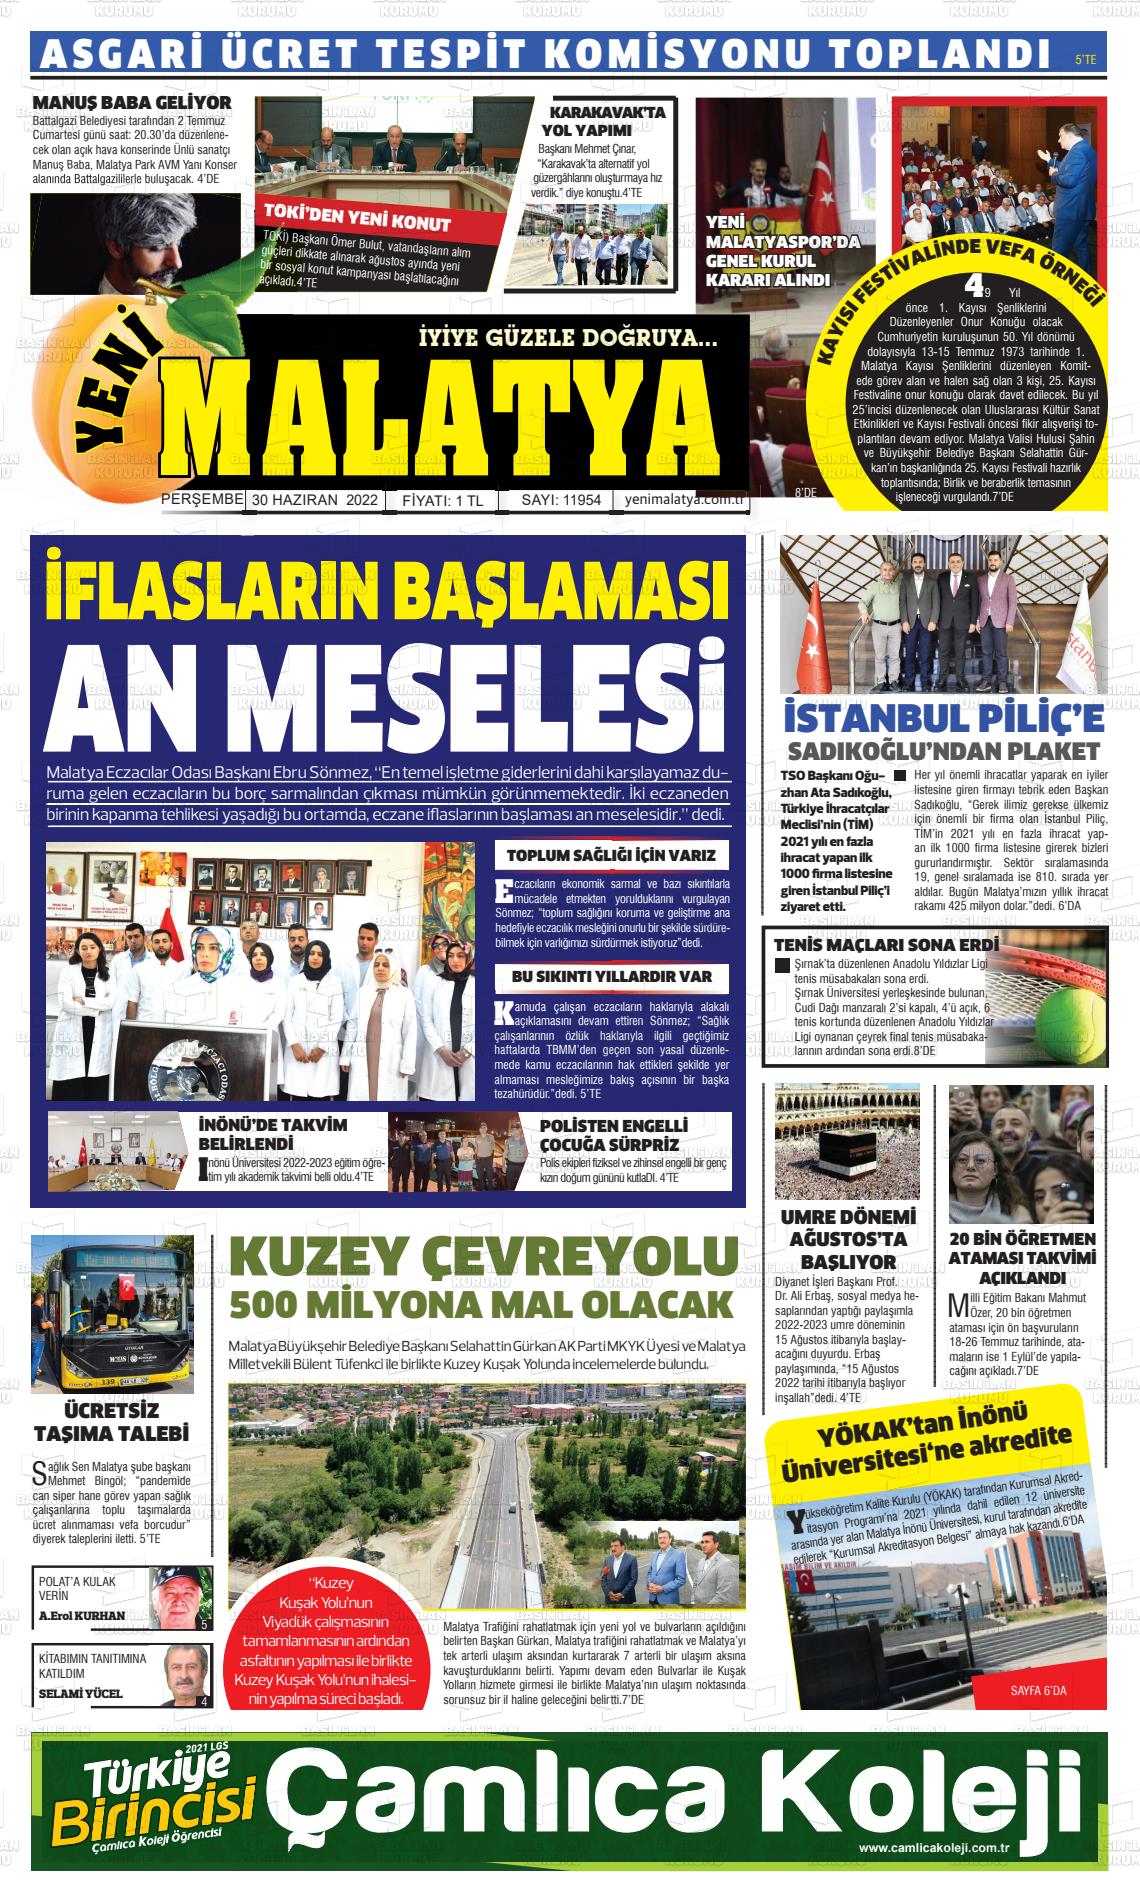 02 Temmuz 2022 Yeni Malatya Gazete Manşeti